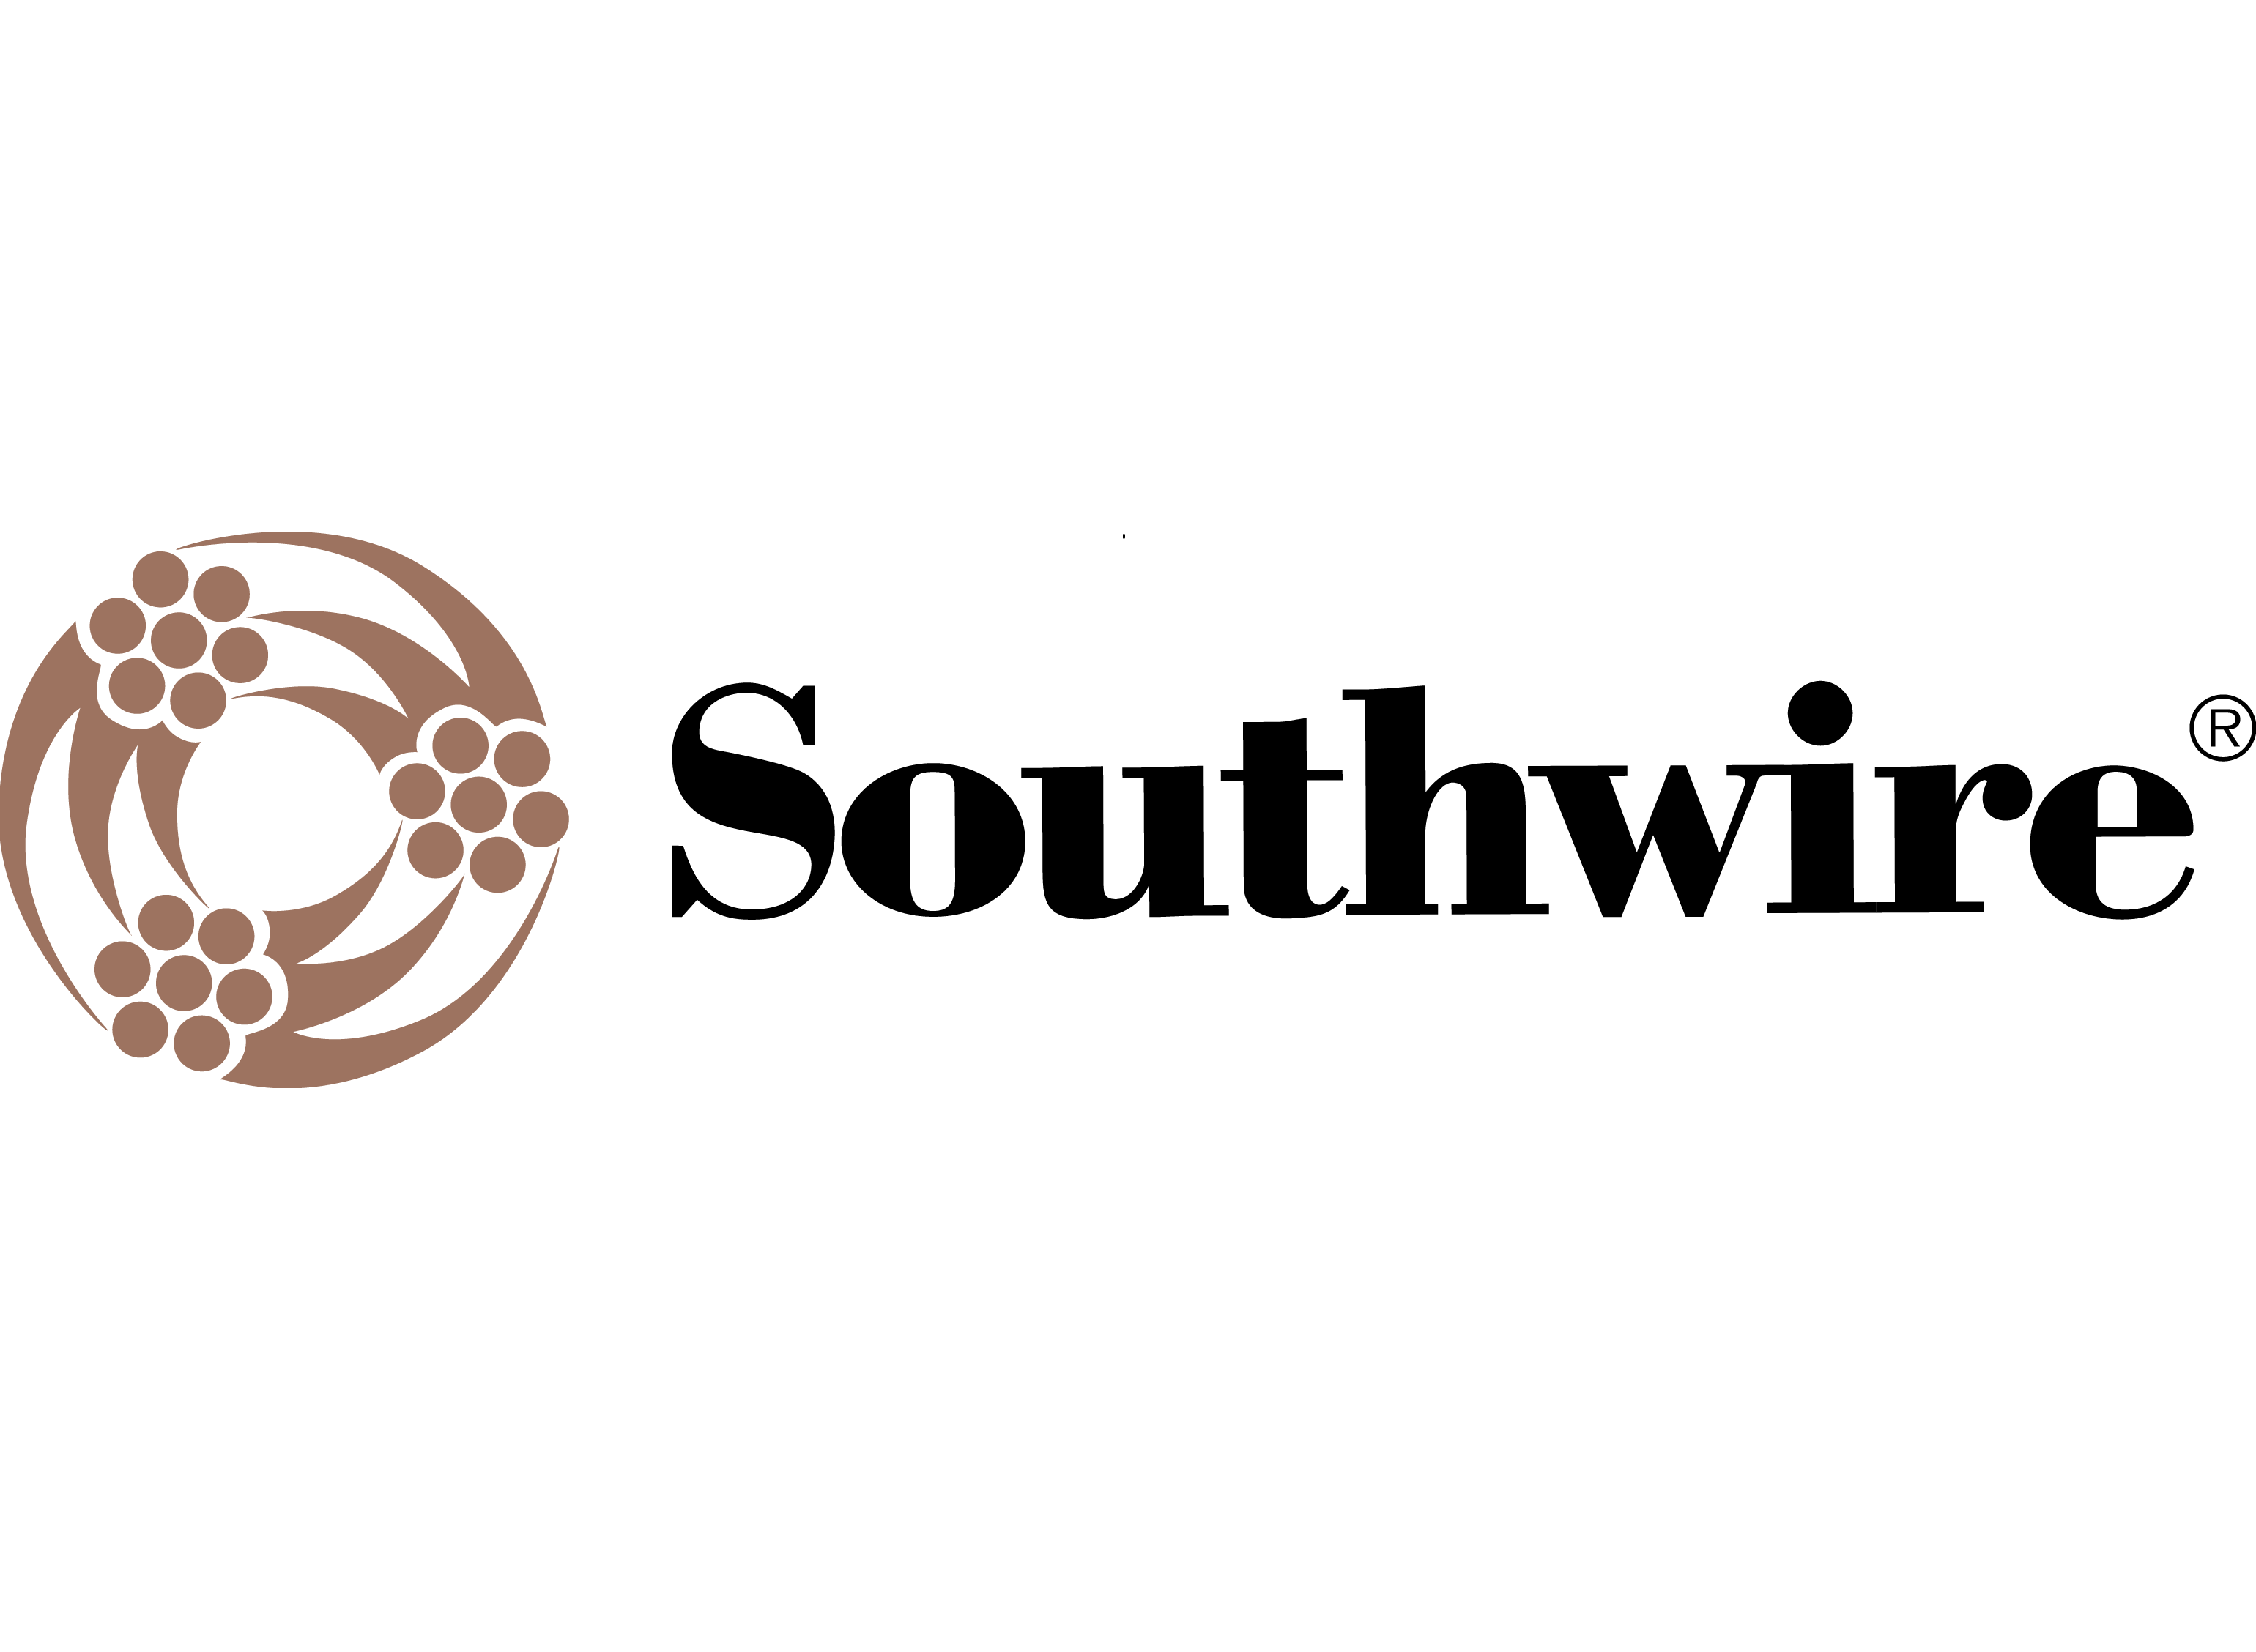 SOUTHWIRE logo